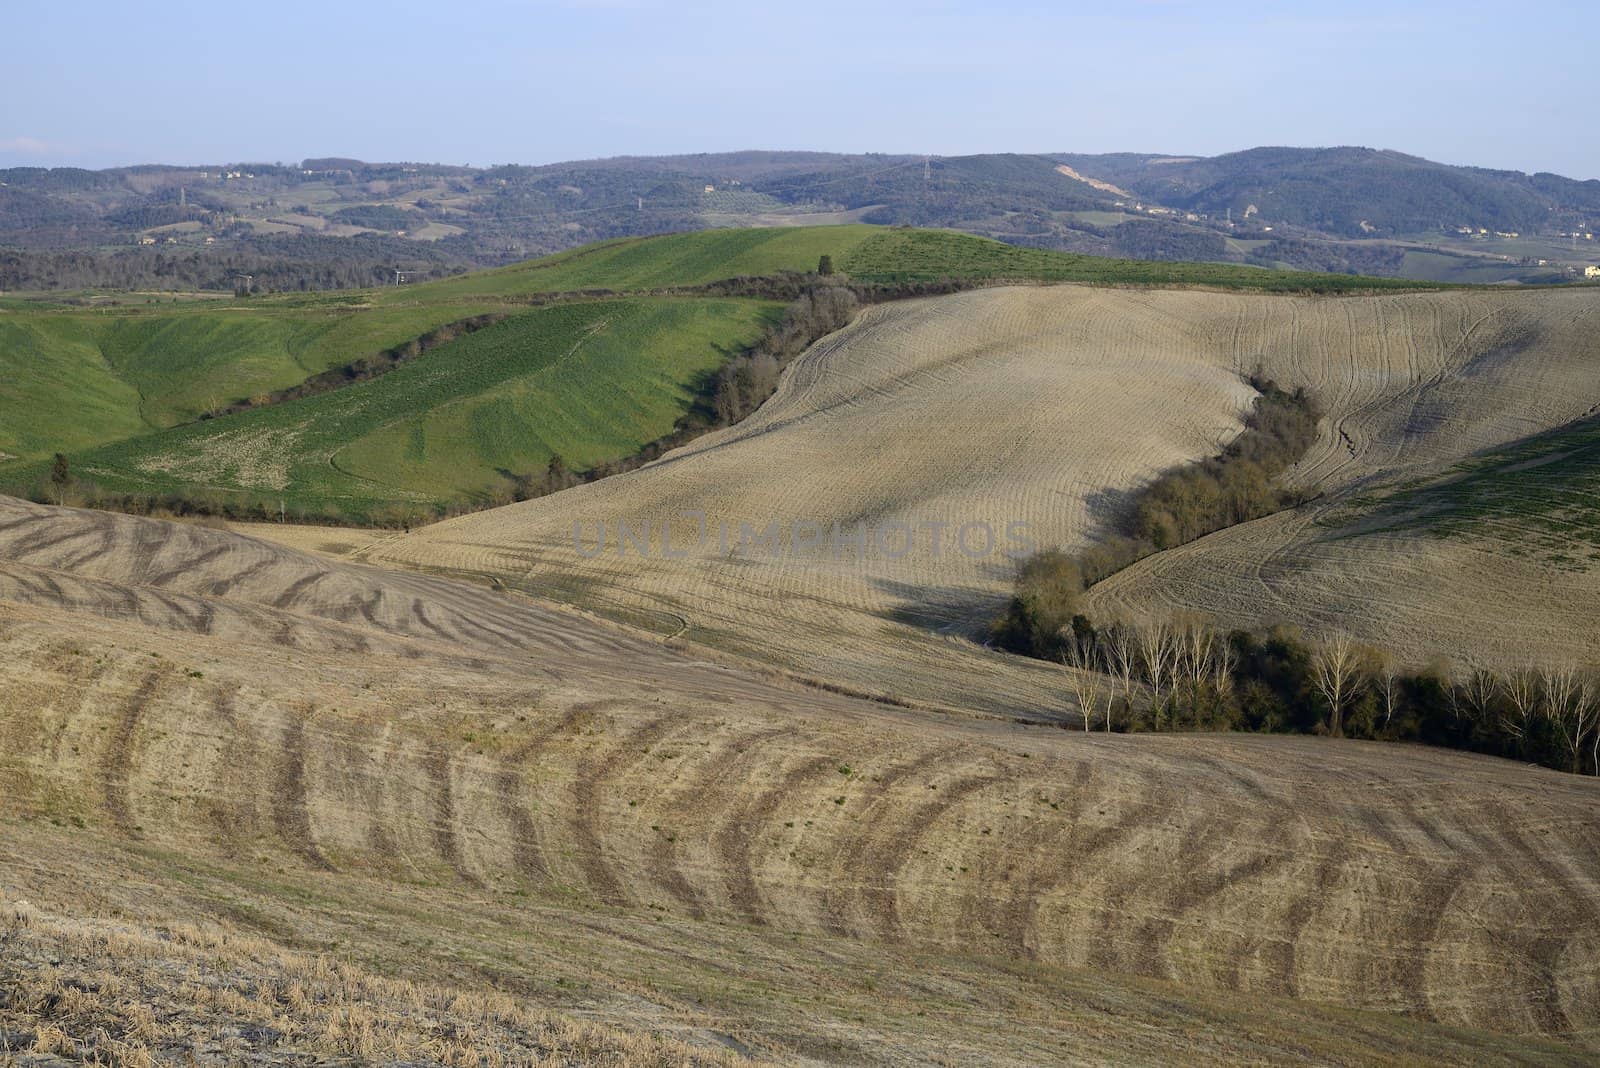 Tuscan hills by mizio1970